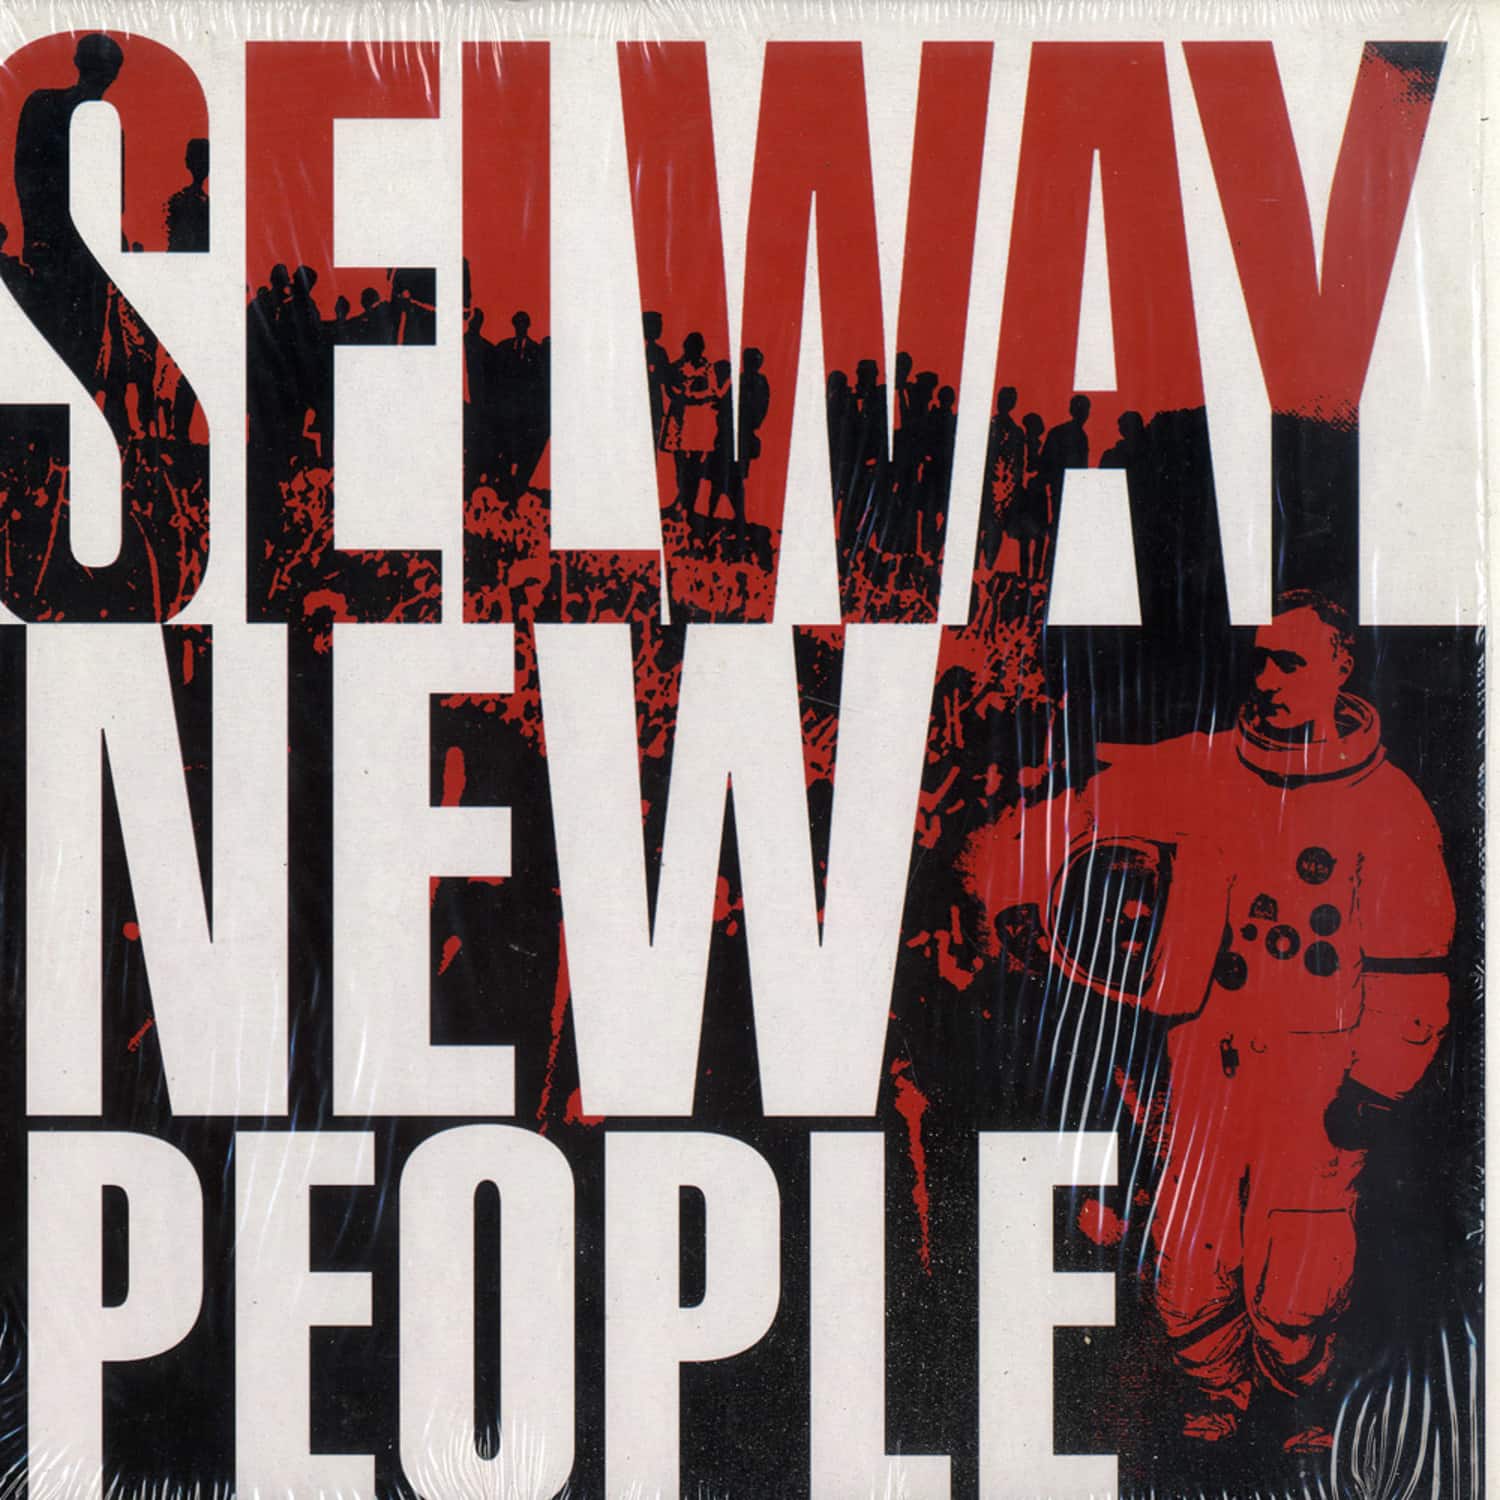 Selway - NEW PEOPLE